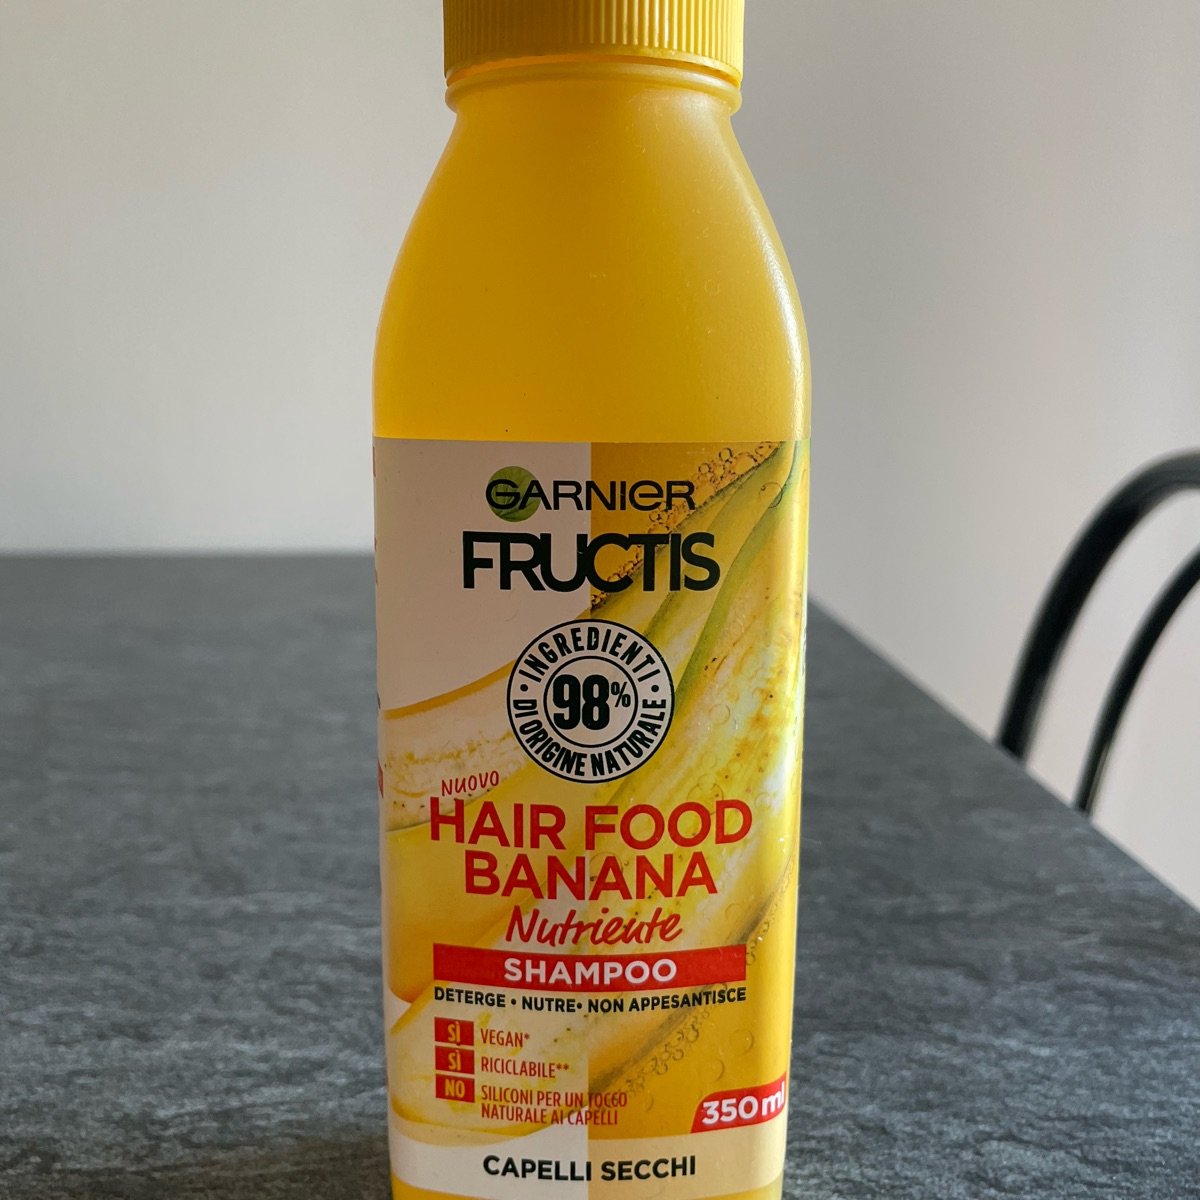 Garnier Fructis Hair food banana shampoo Reviews | abillion